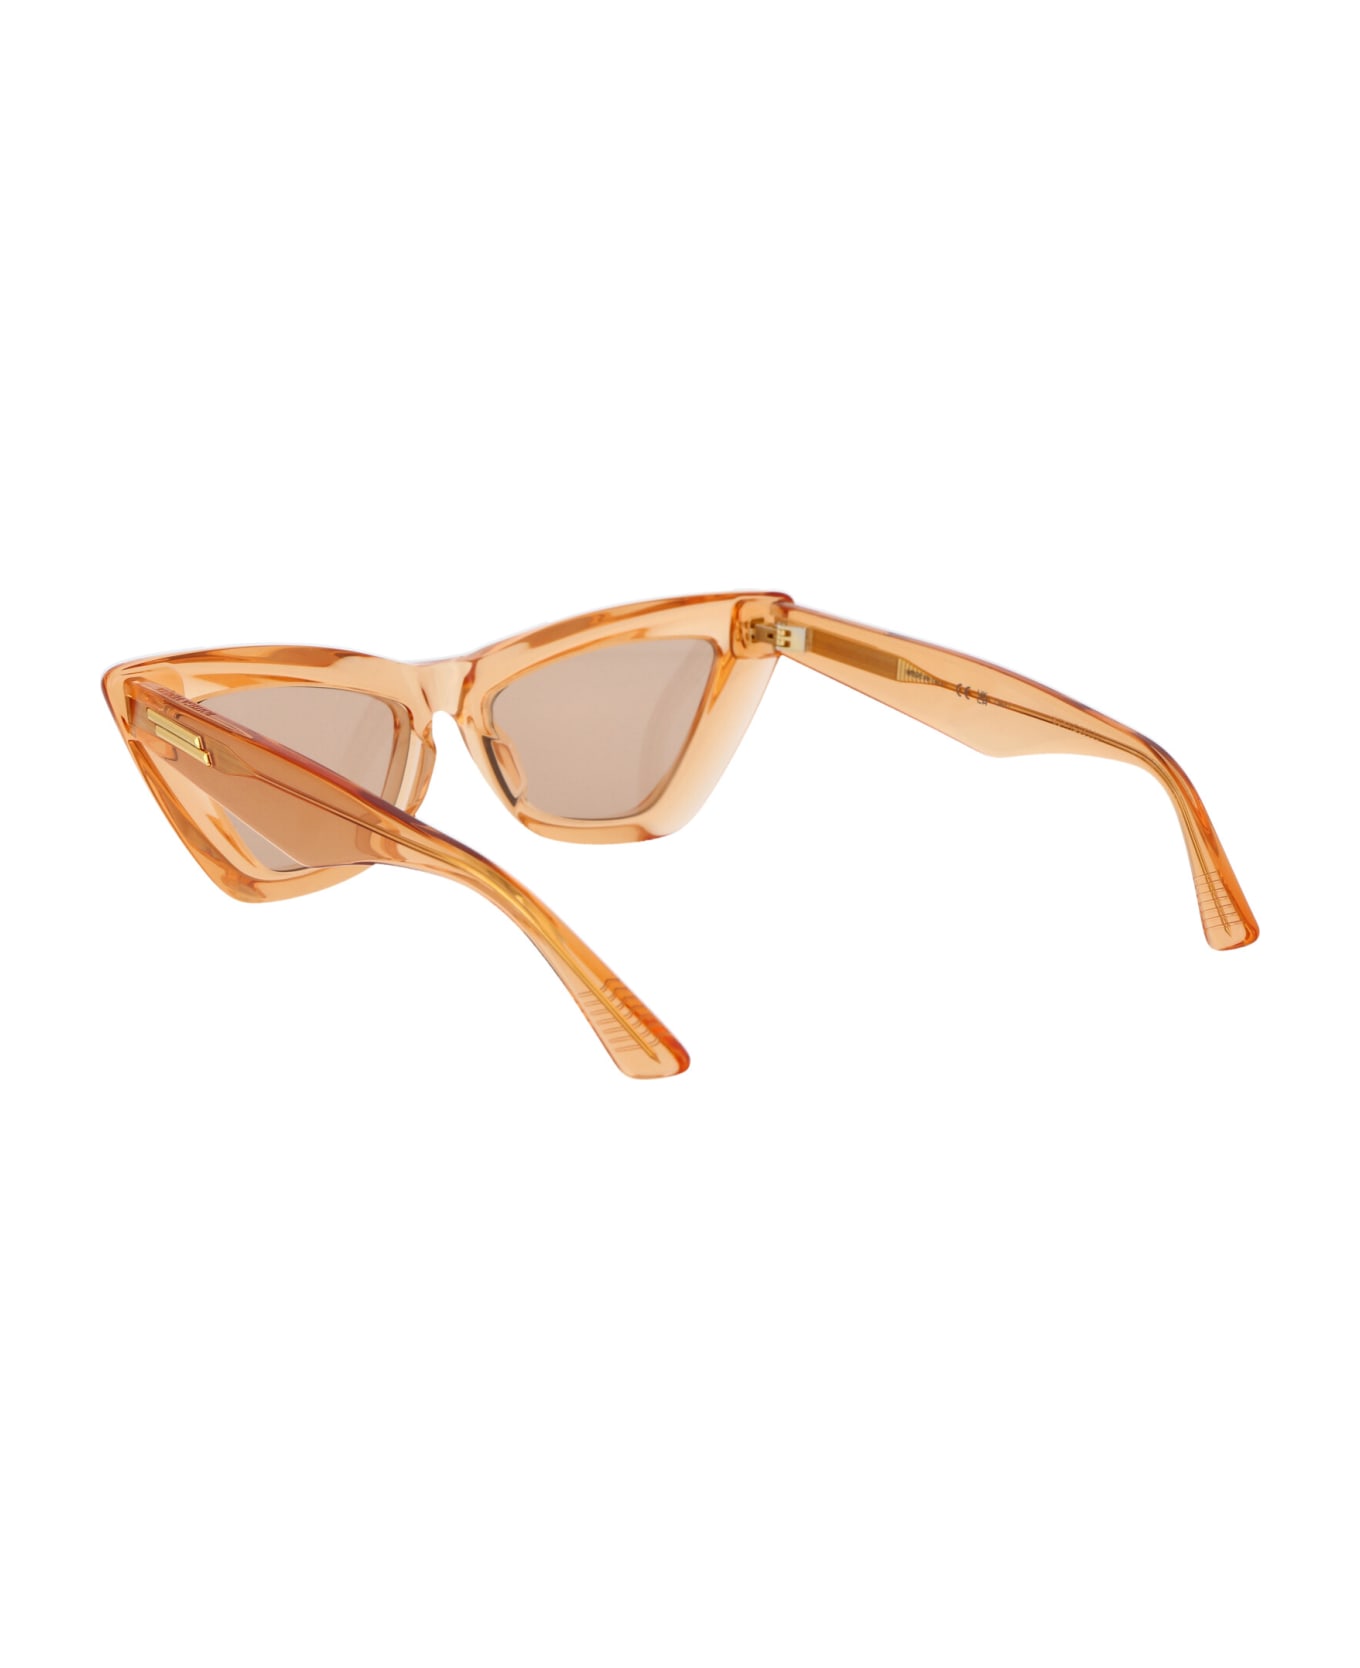 Bottega Veneta Eyewear Bv1101s Sunglasses - 011 ORANGE ORANGE BROWN